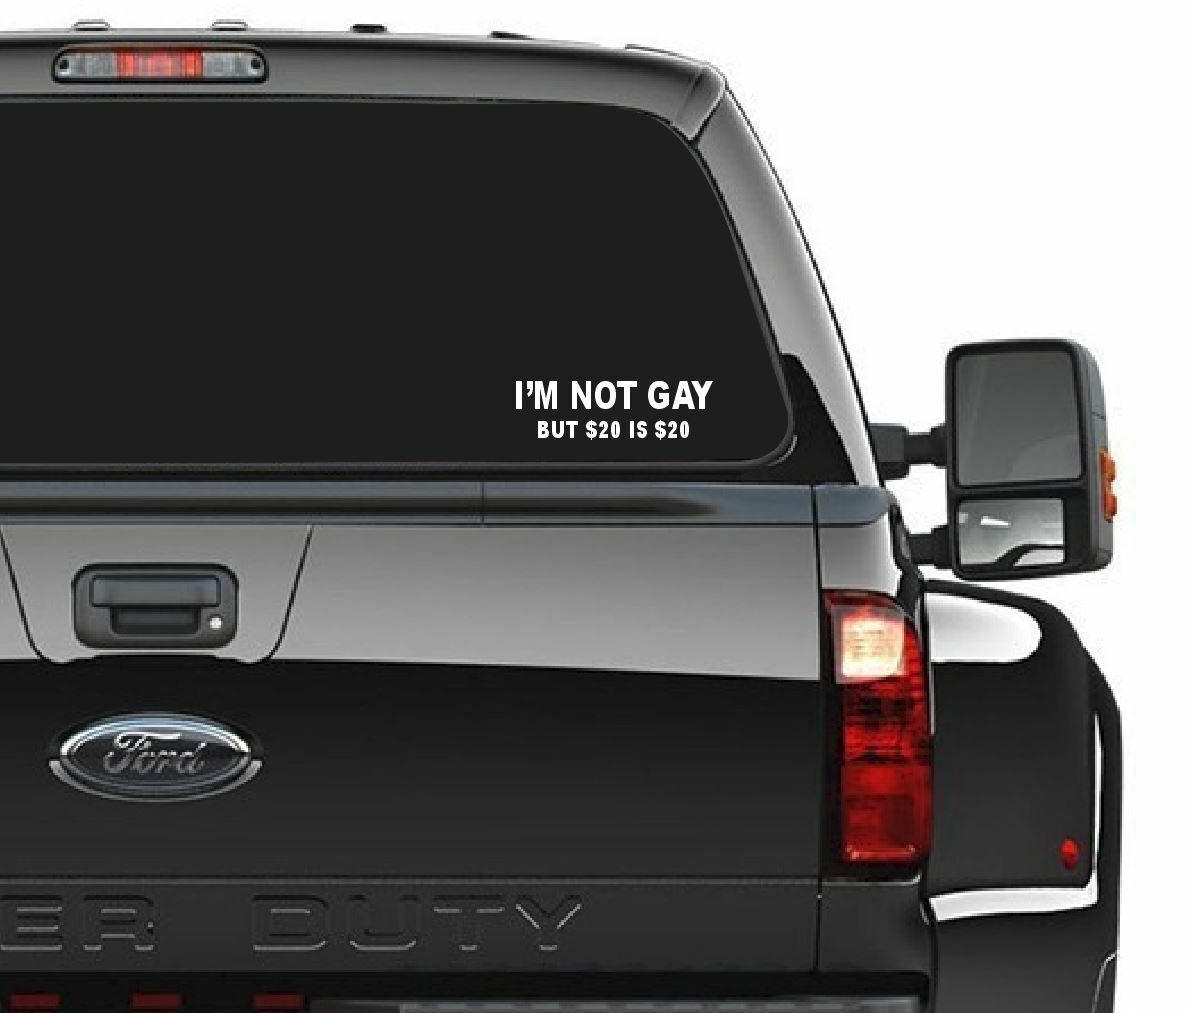 I'm Not Gay $20 Funny Bumper Car Window Truck Sticker Vinyl Decal 8" X 2" - Powercall Sirens LLC